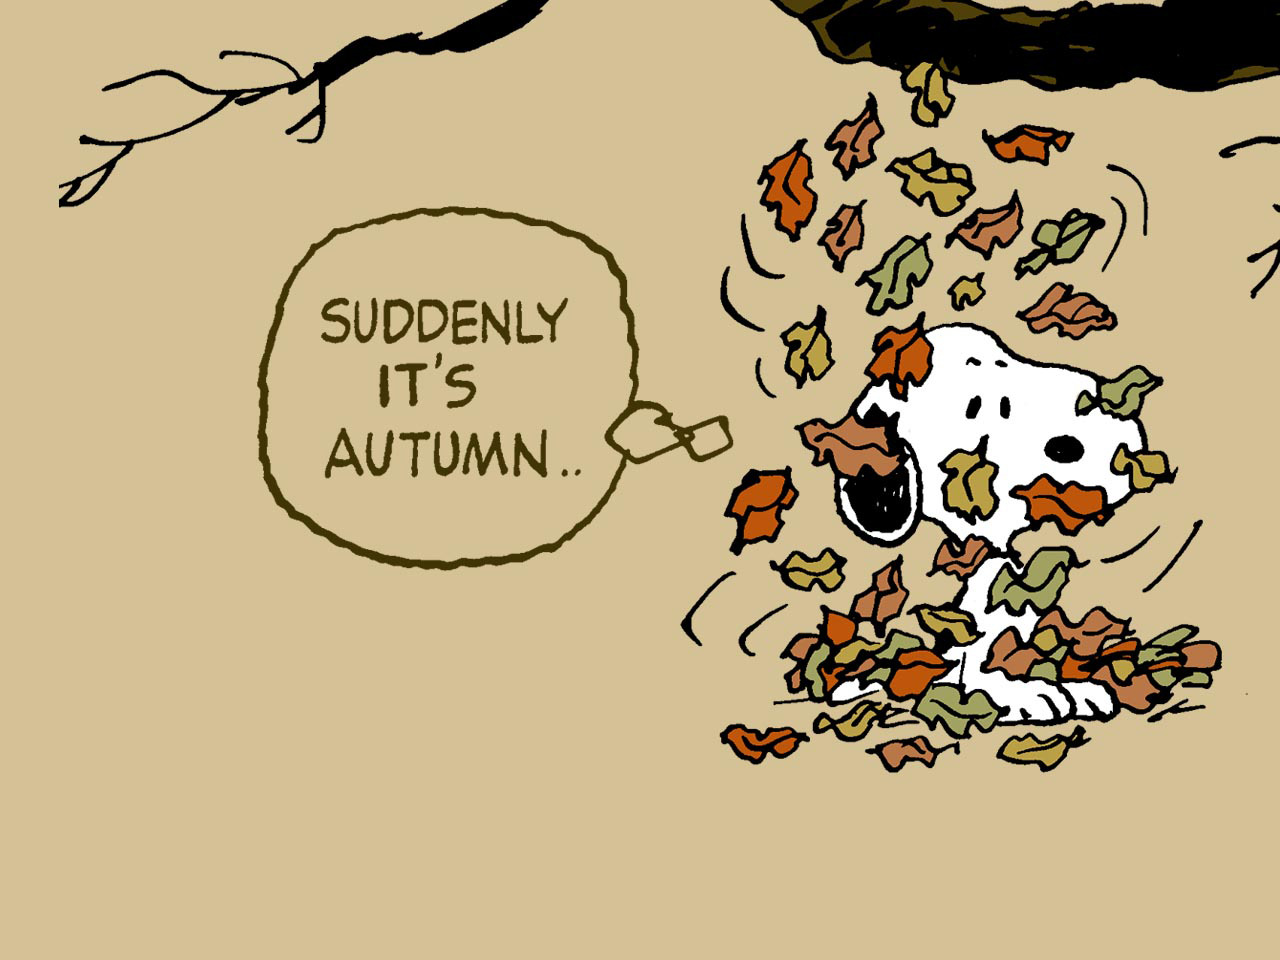 Fall Wallpaper on Autumn Snoopy Peanuts Comic Strip Hd Wallpaper   Cartoon   Animation